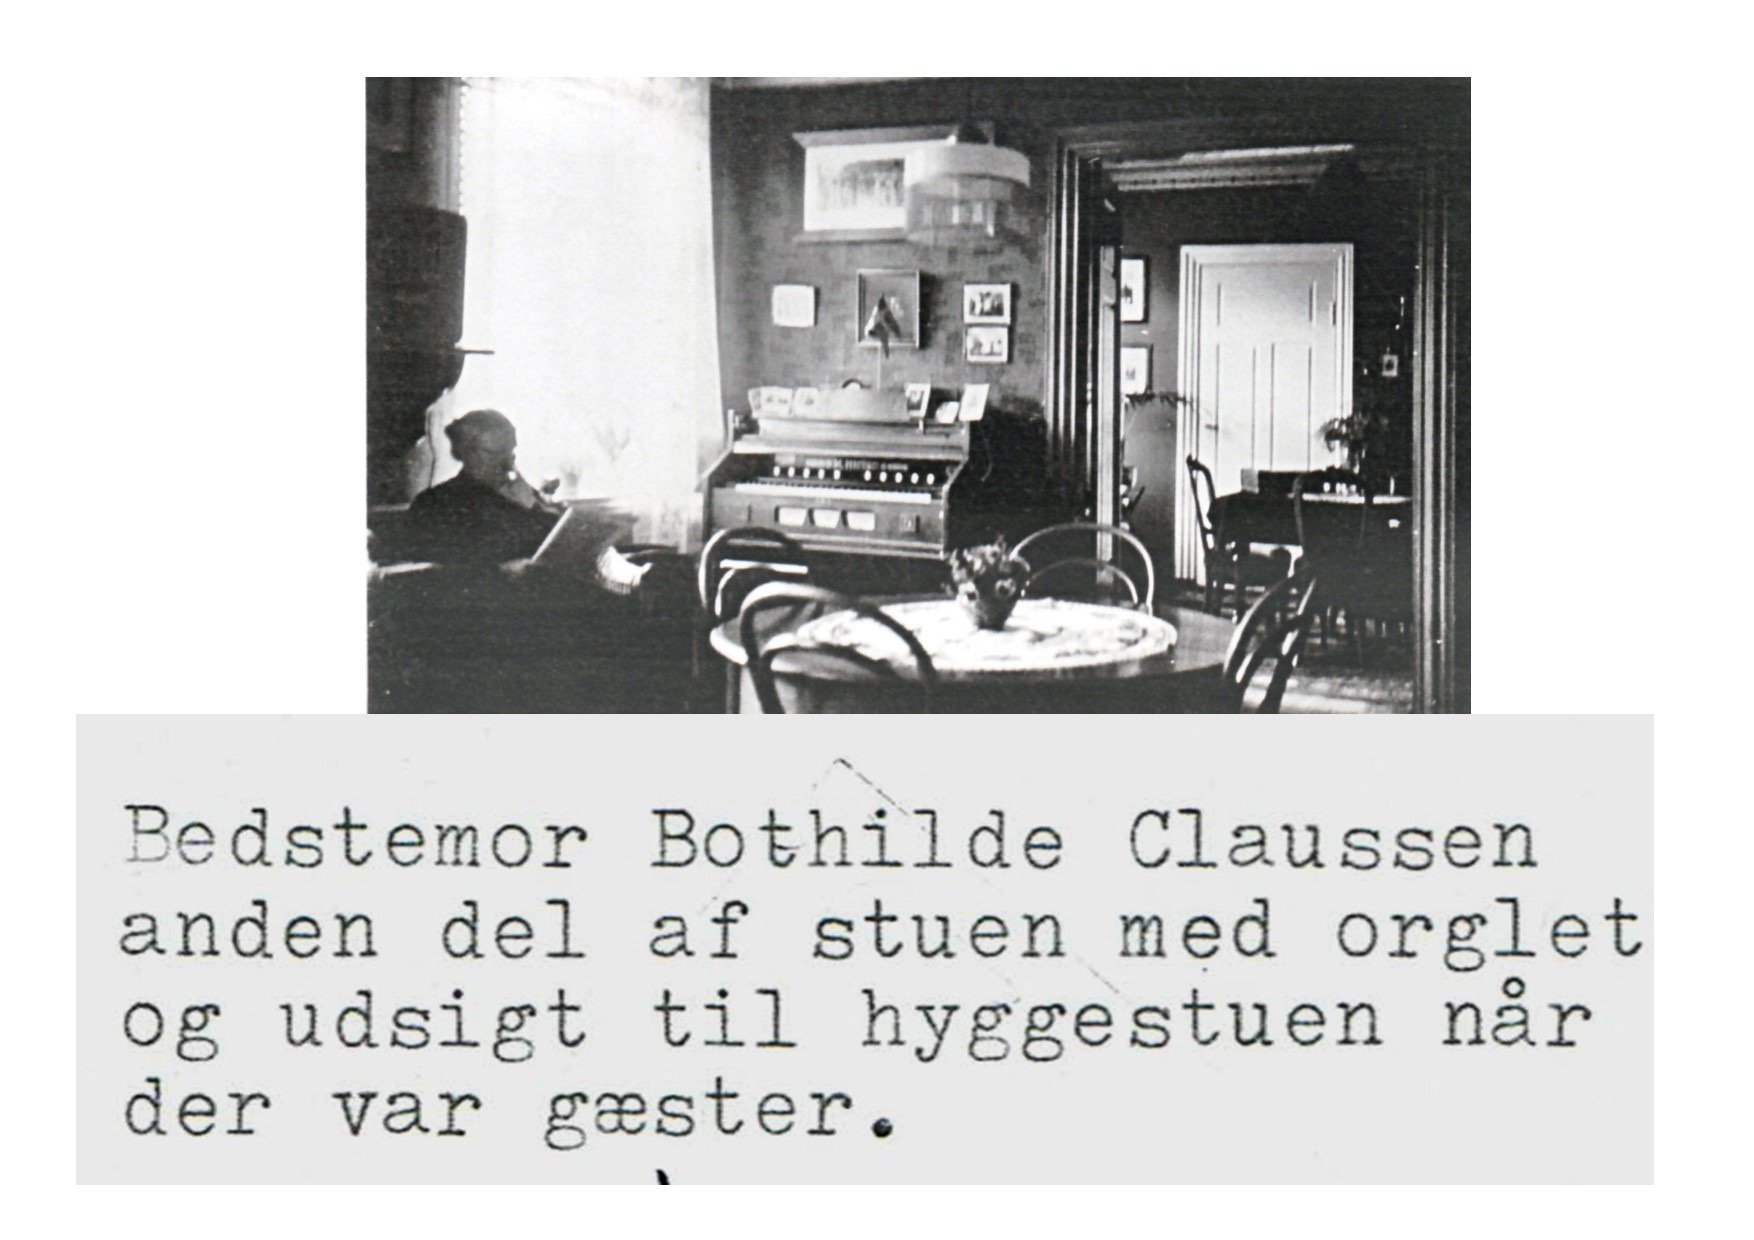 Bothilde Claussen